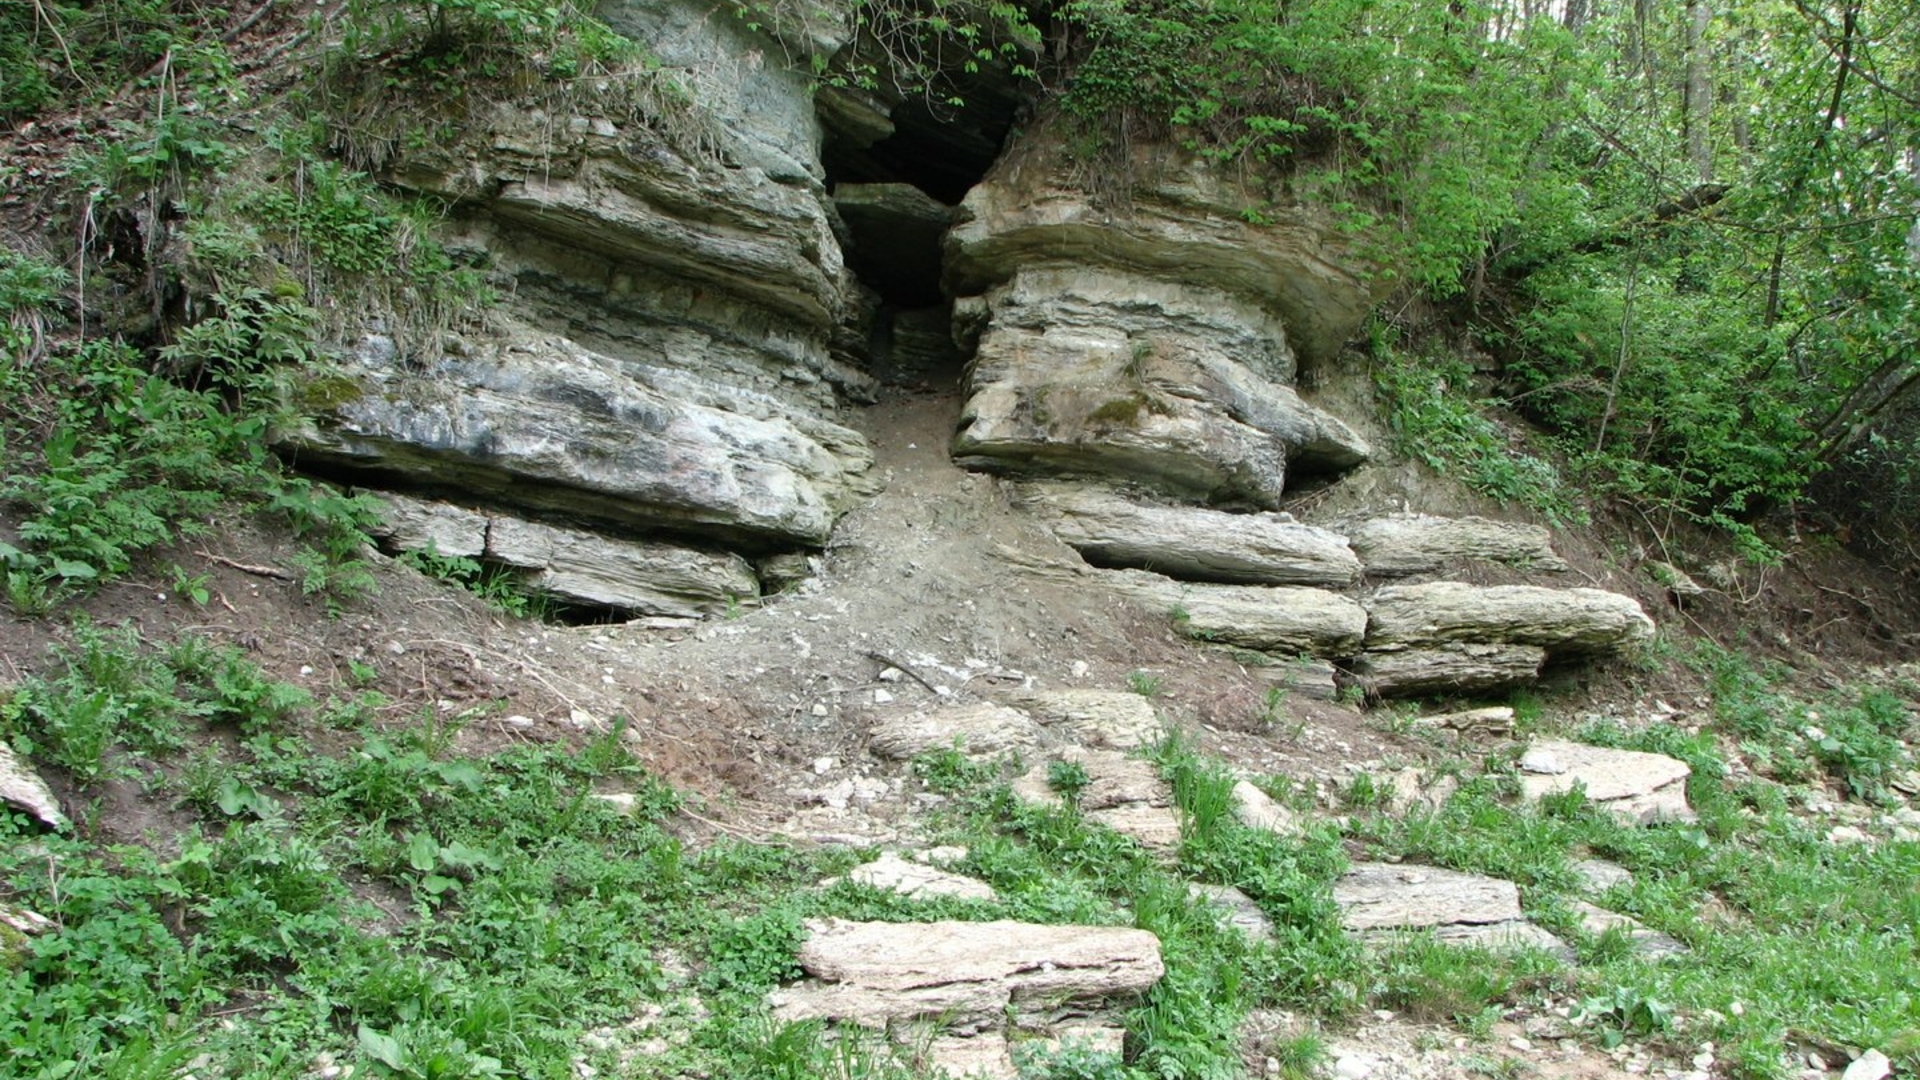 Nature monument "Velniapilis Rock"